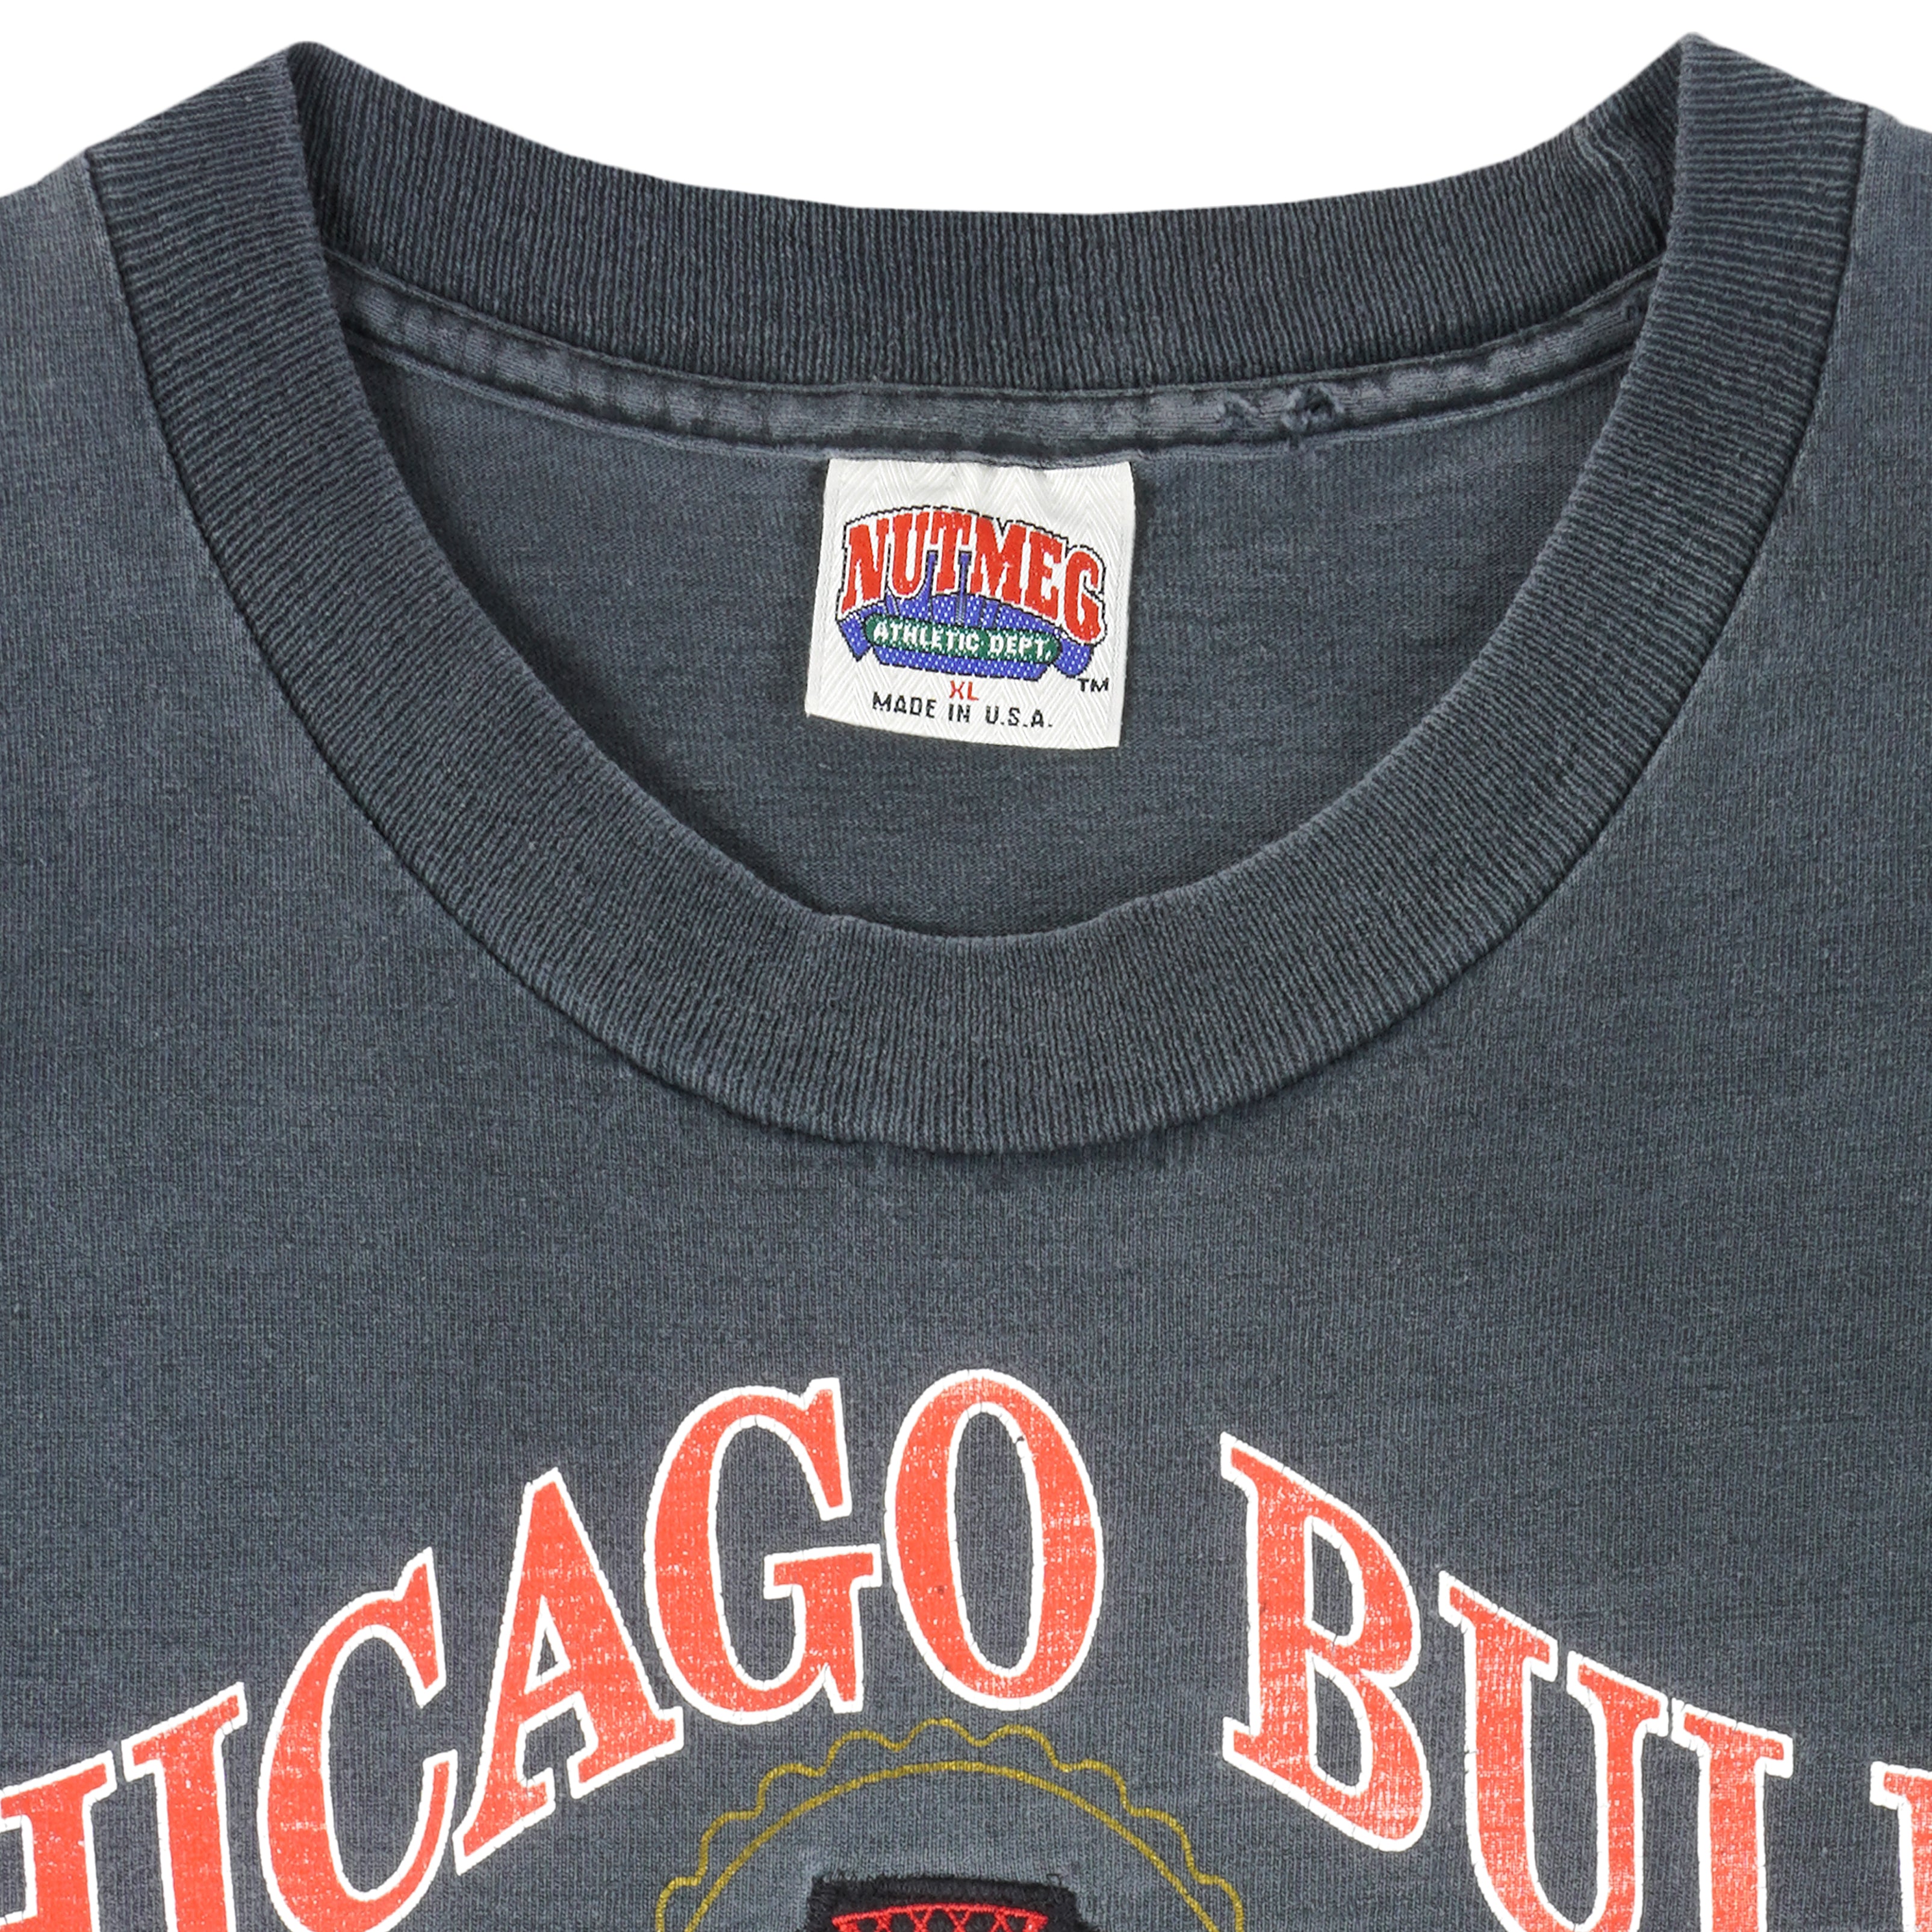 1998 Chicago Bulls 6 Times NBA Champions Shirt Vintage 90s -  Finland